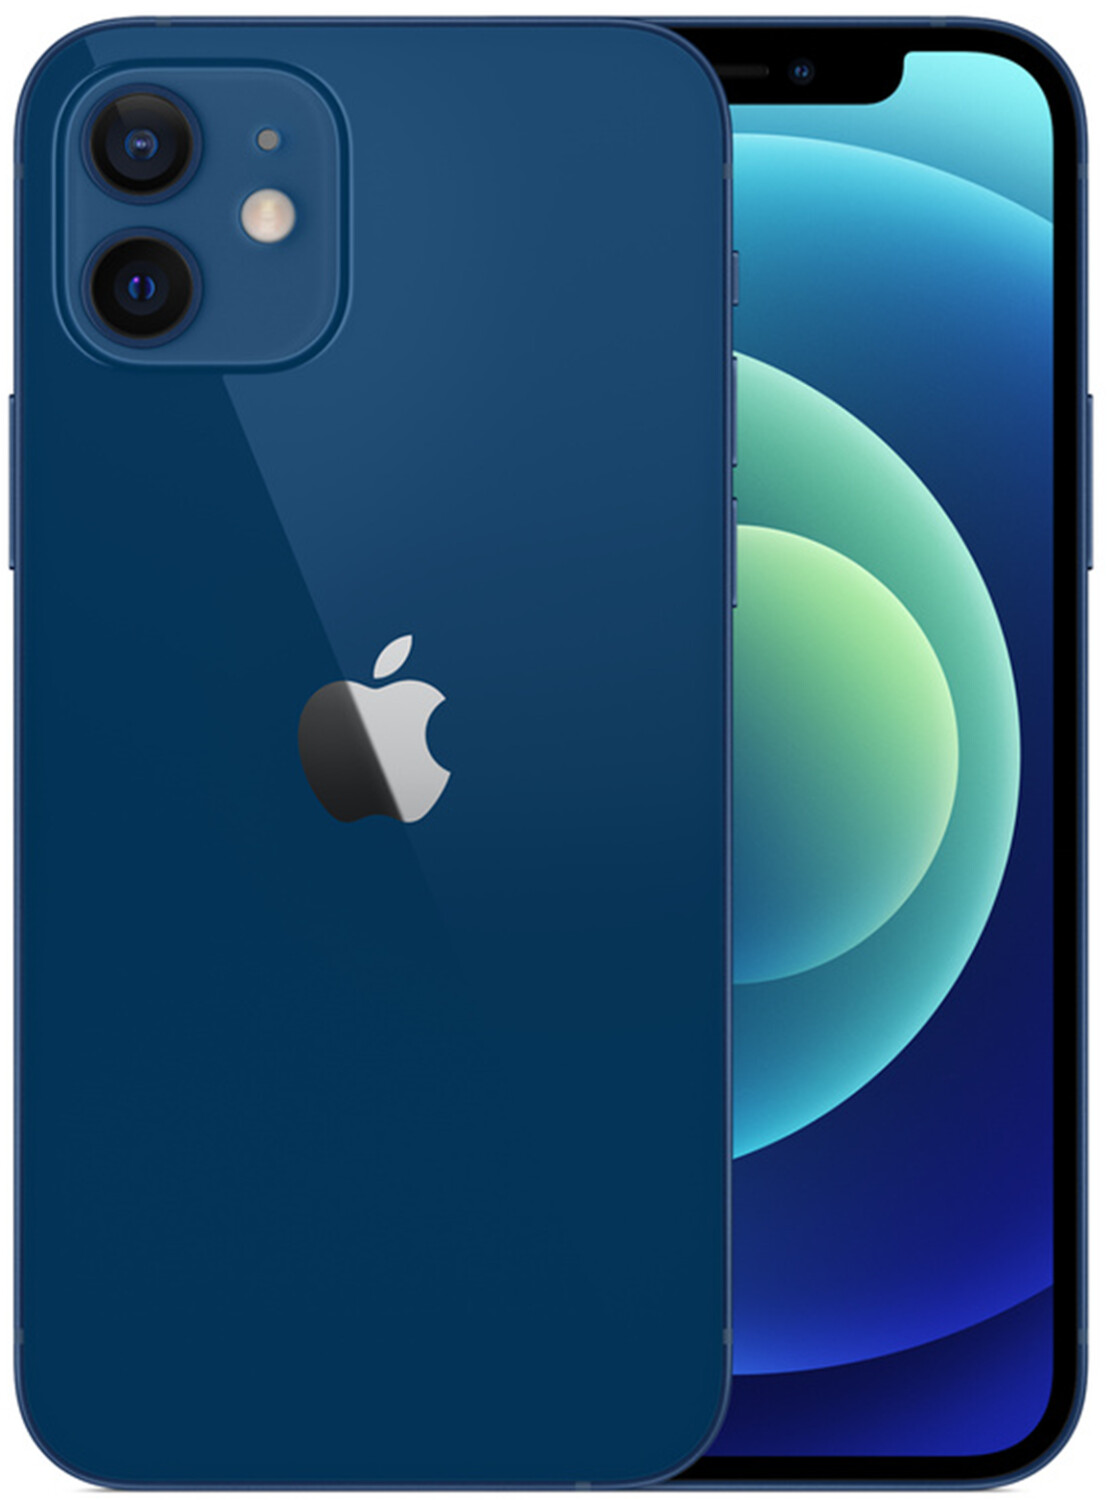 Apple iPhone 12 64GB Blau ab 533,98 € | Preisvergleich bei idealo.de